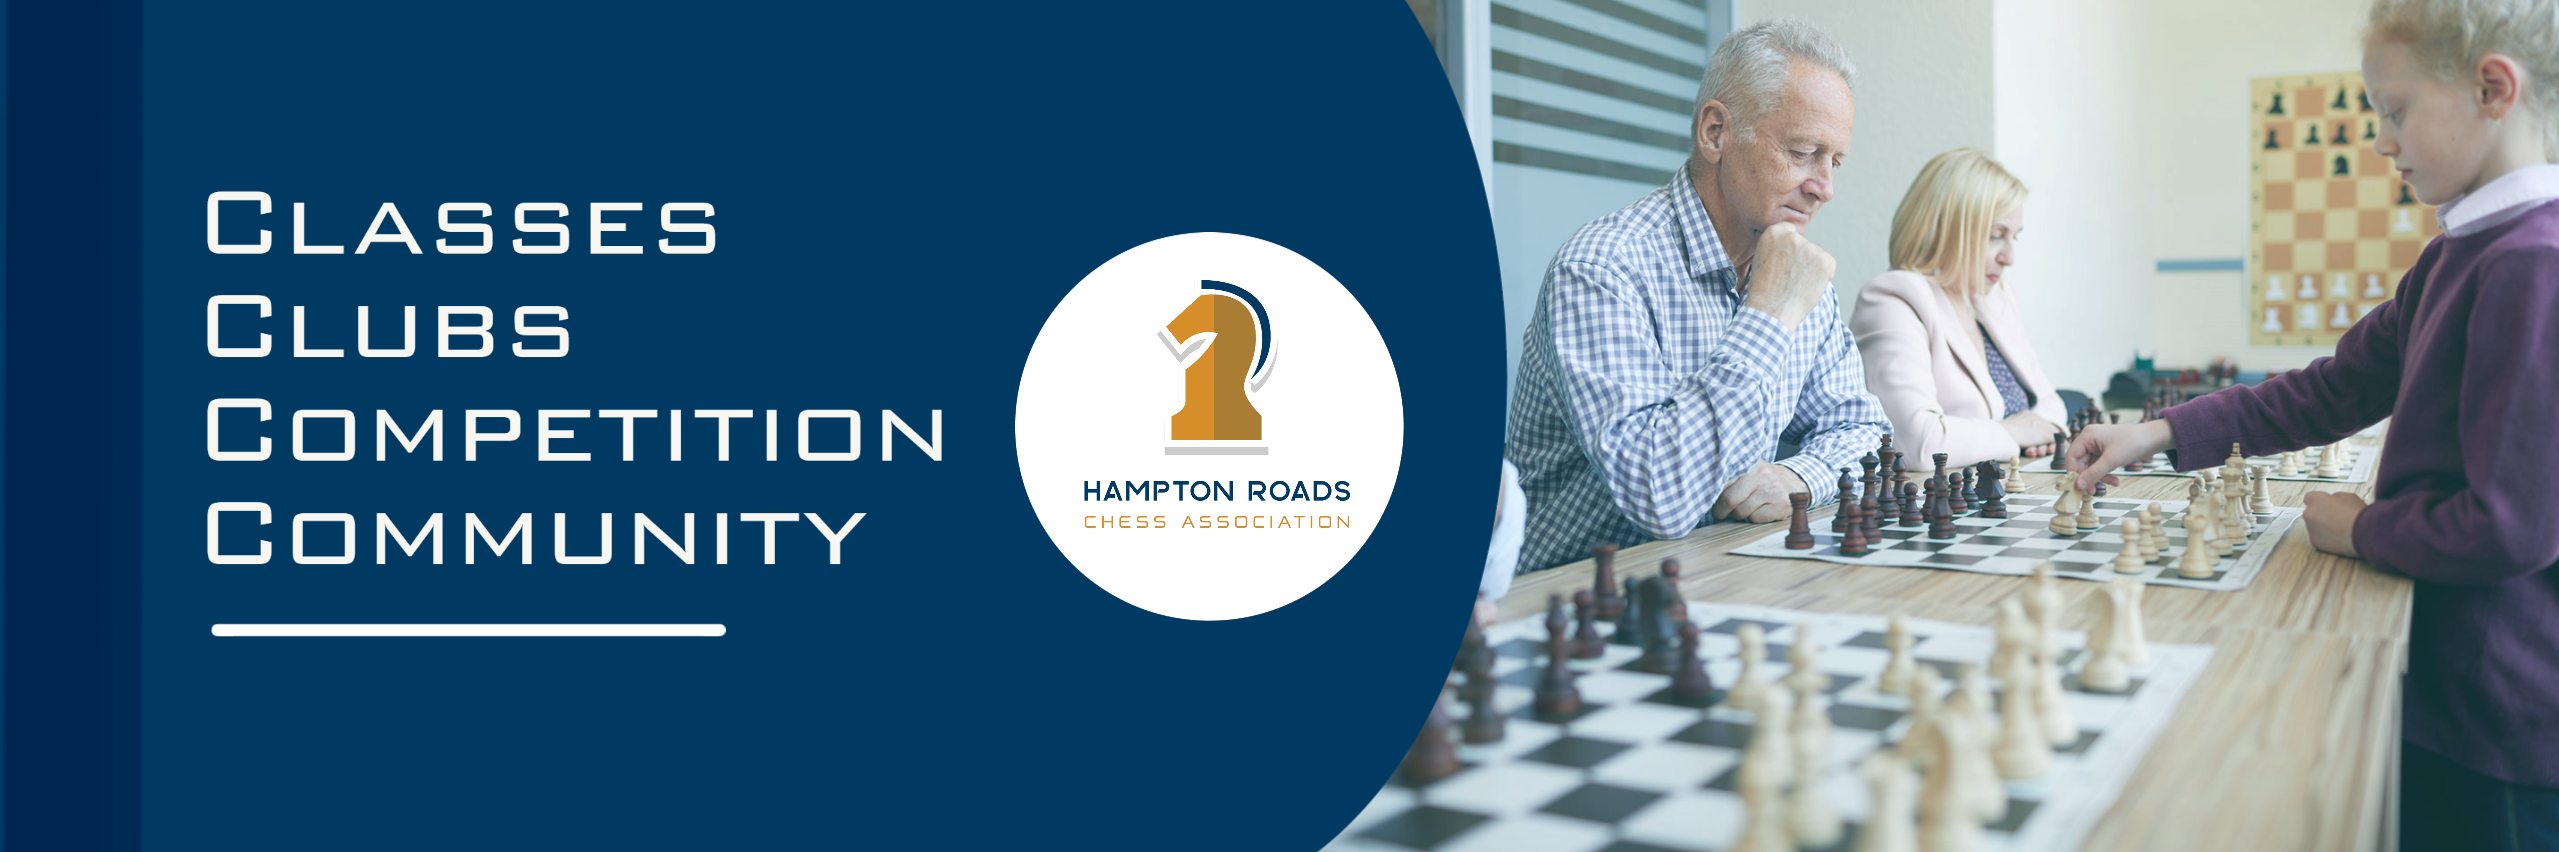 Hampton Roads Chess Association